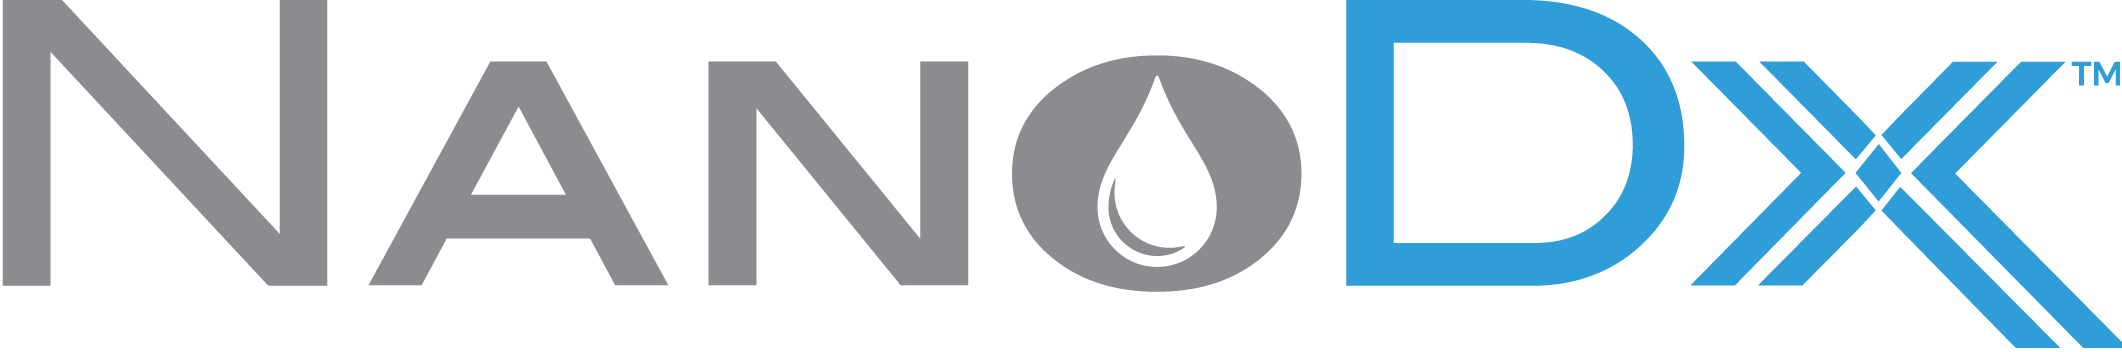 NanoDiagnosticsTM, Inc logo